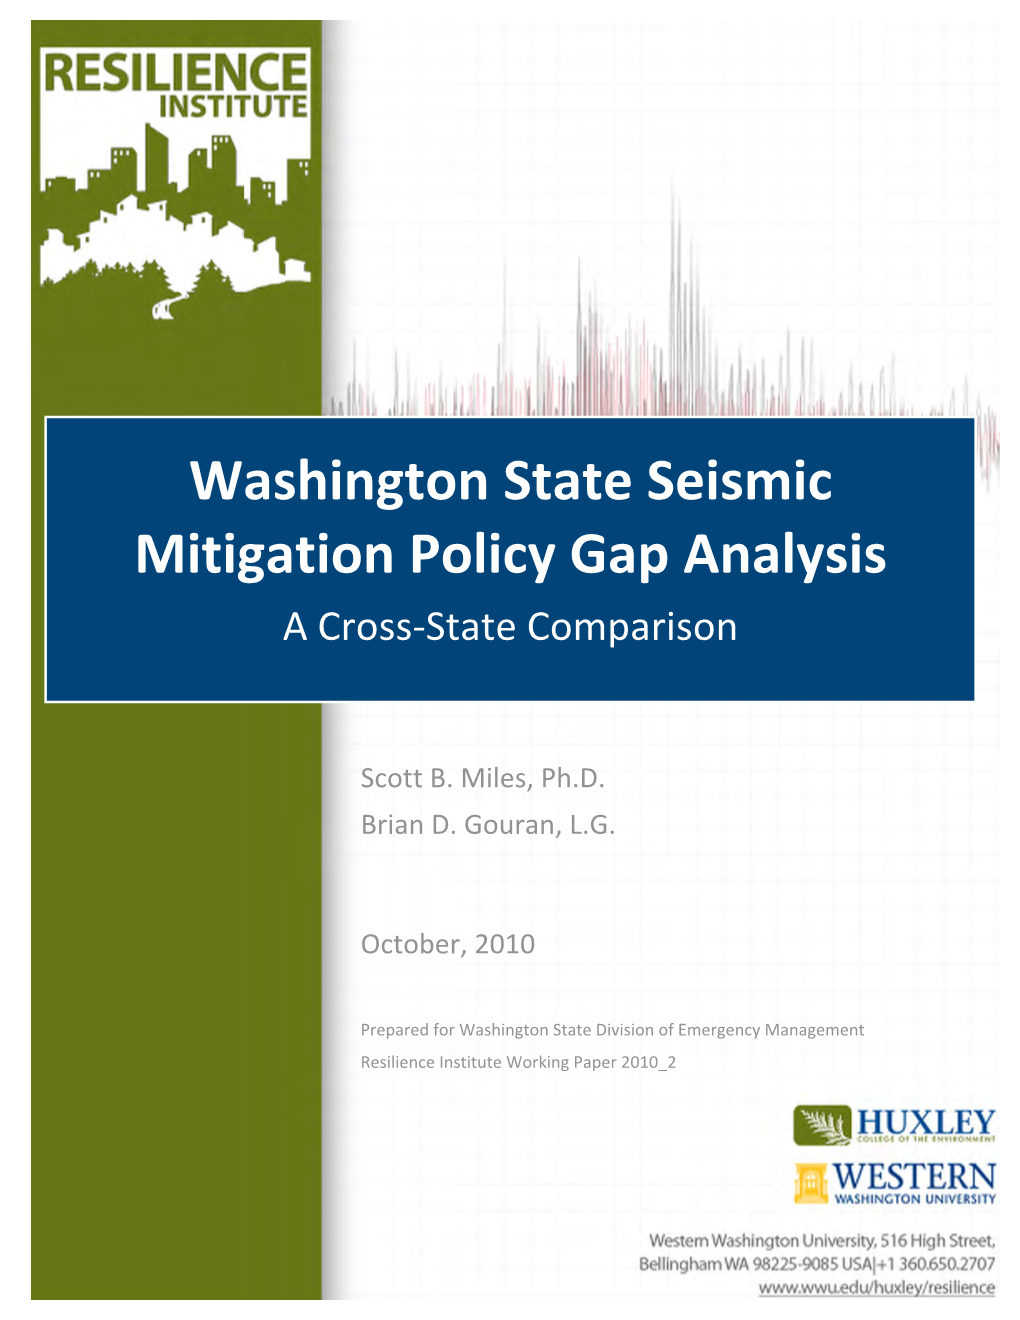 Washington State Seismic Mitigation Policy Gap Analysis